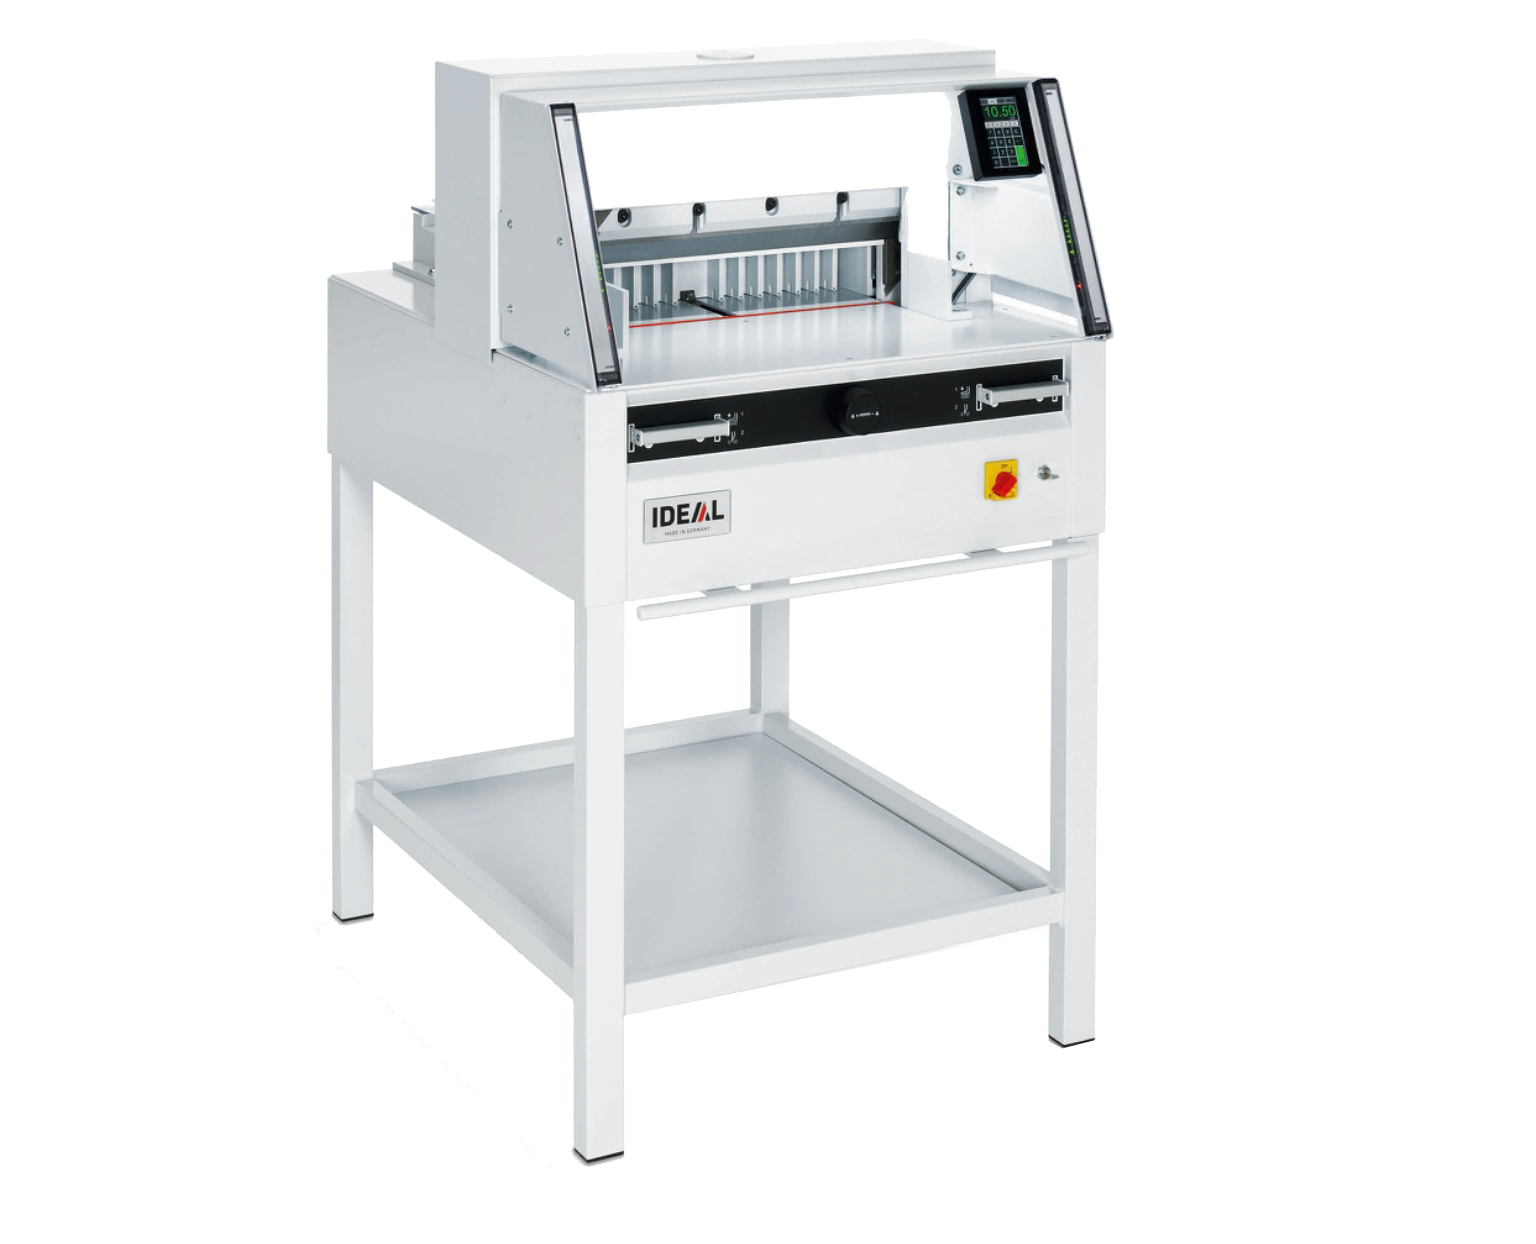 Small whit print machinery